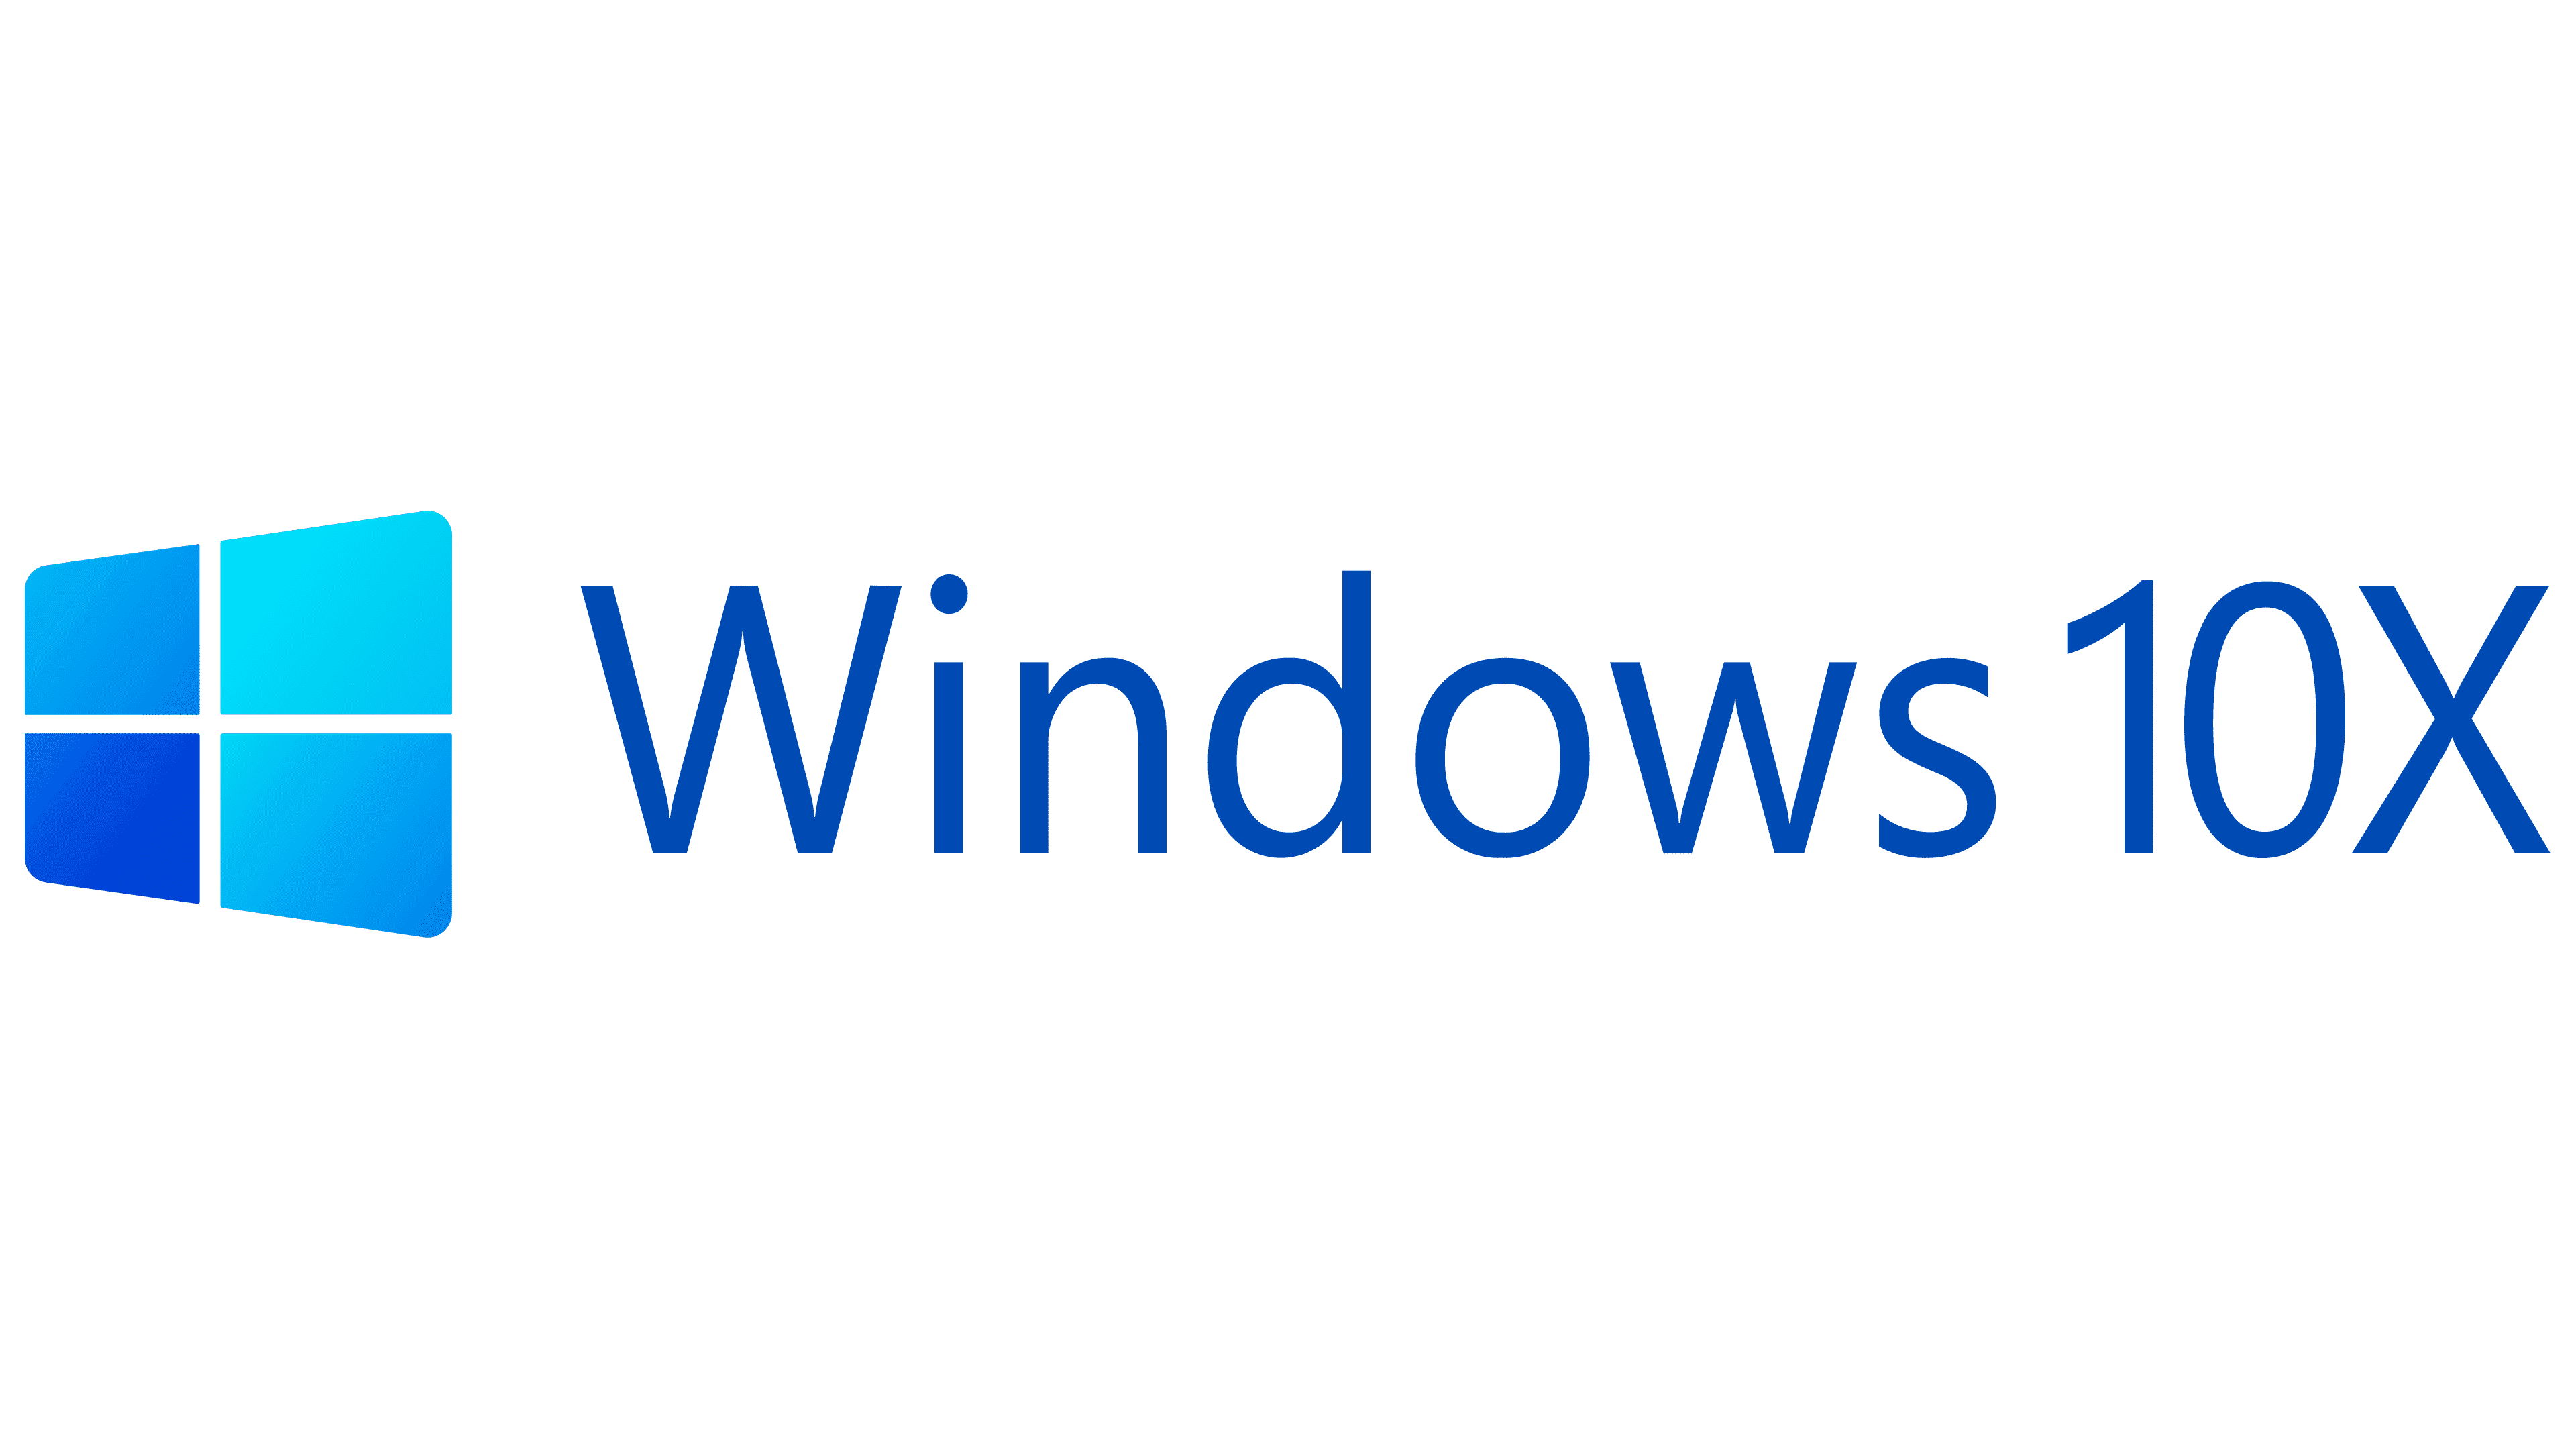 Windows 10X Logo Wallpaper